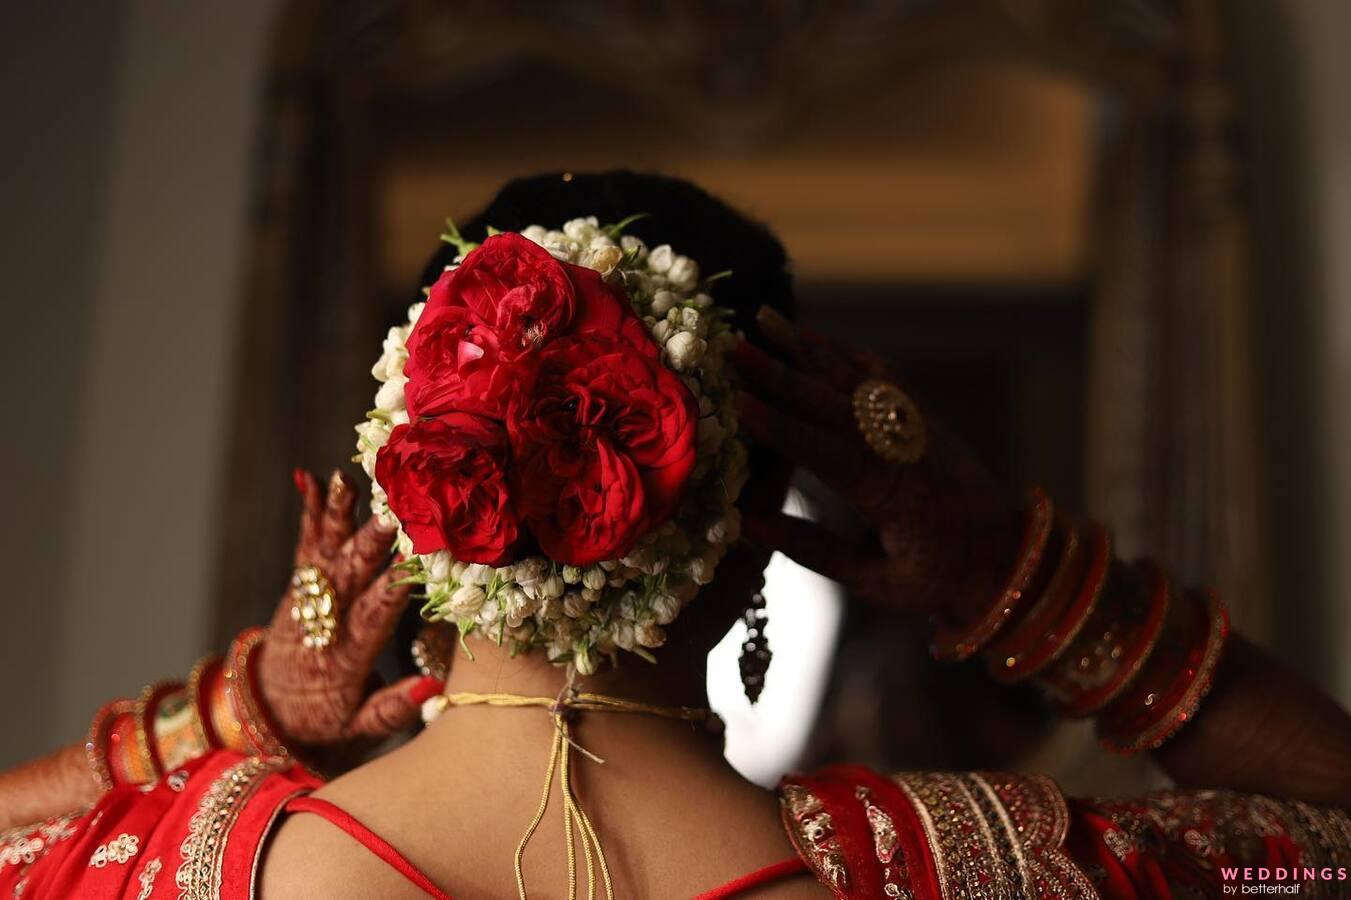 From Shraddha Arya to Kritika Kamra, check them out in elegant ethnic wear